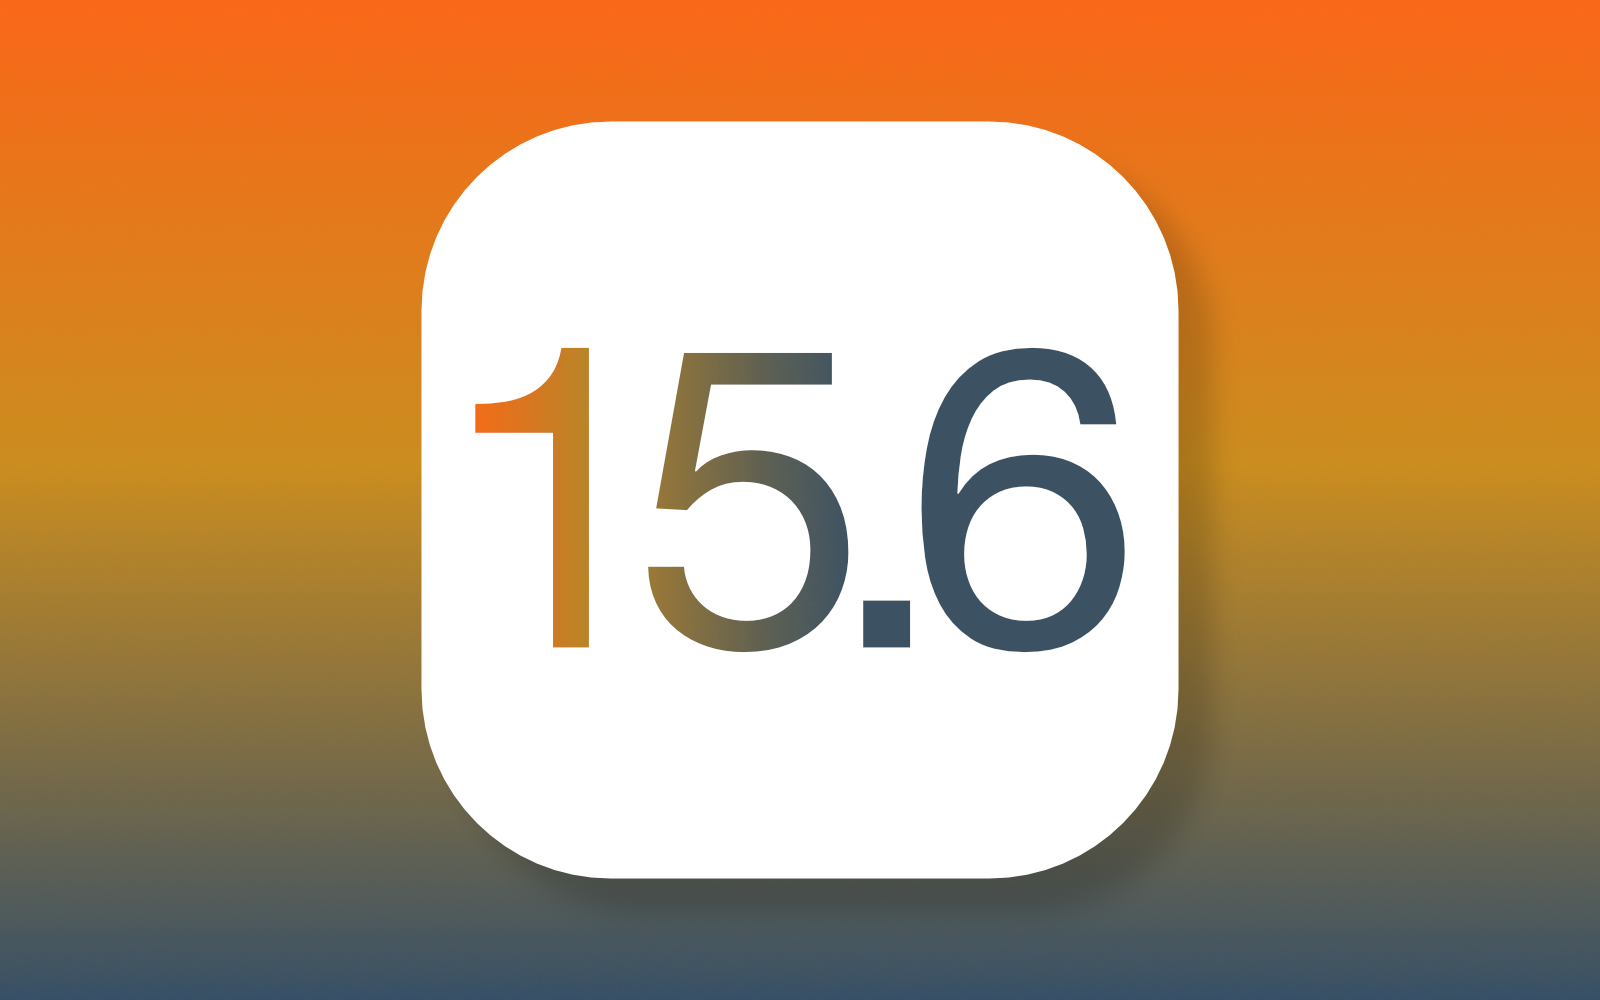 IOS15 6 update release